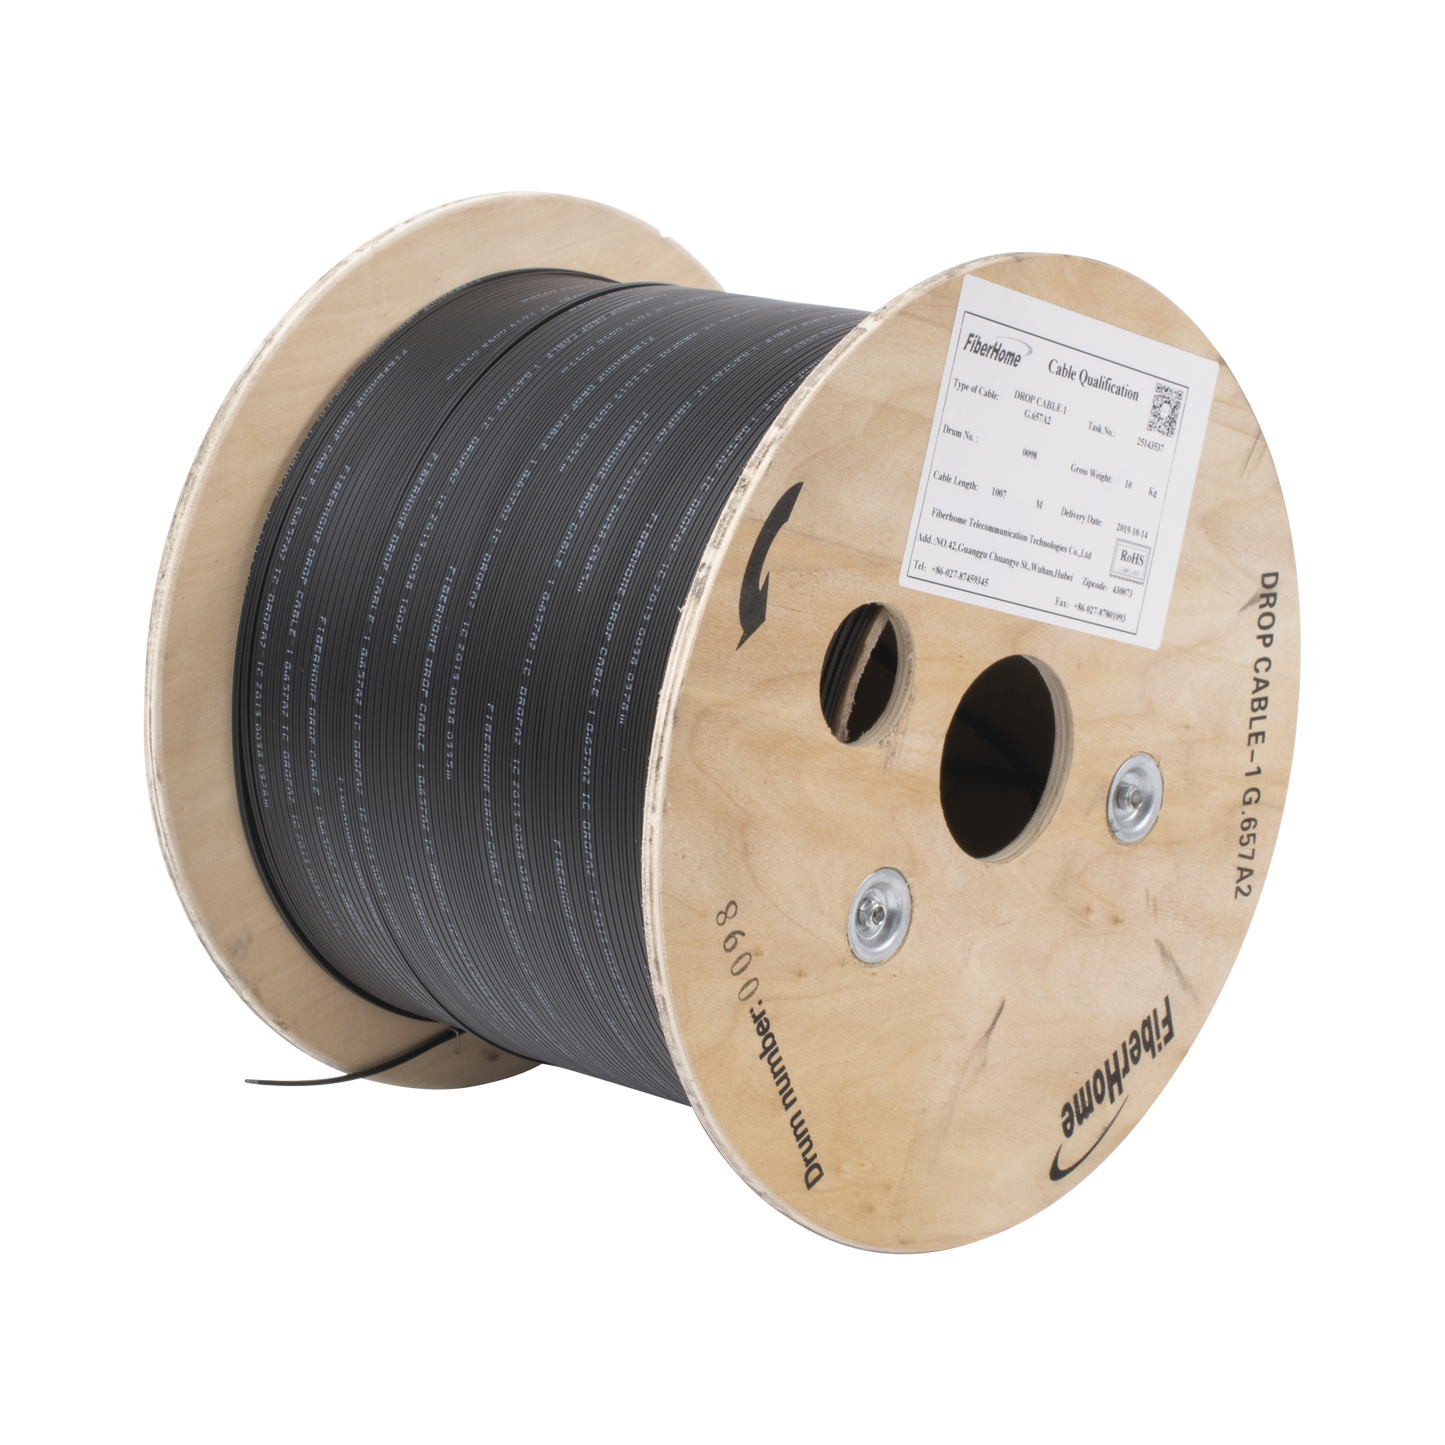 1 Kilometer Drum Drop Fiber Cable, 1 Core, Indoor/Outdoor G.657A2 single-mode of 1 wire (unifiber), Dielectric, Black Jacket